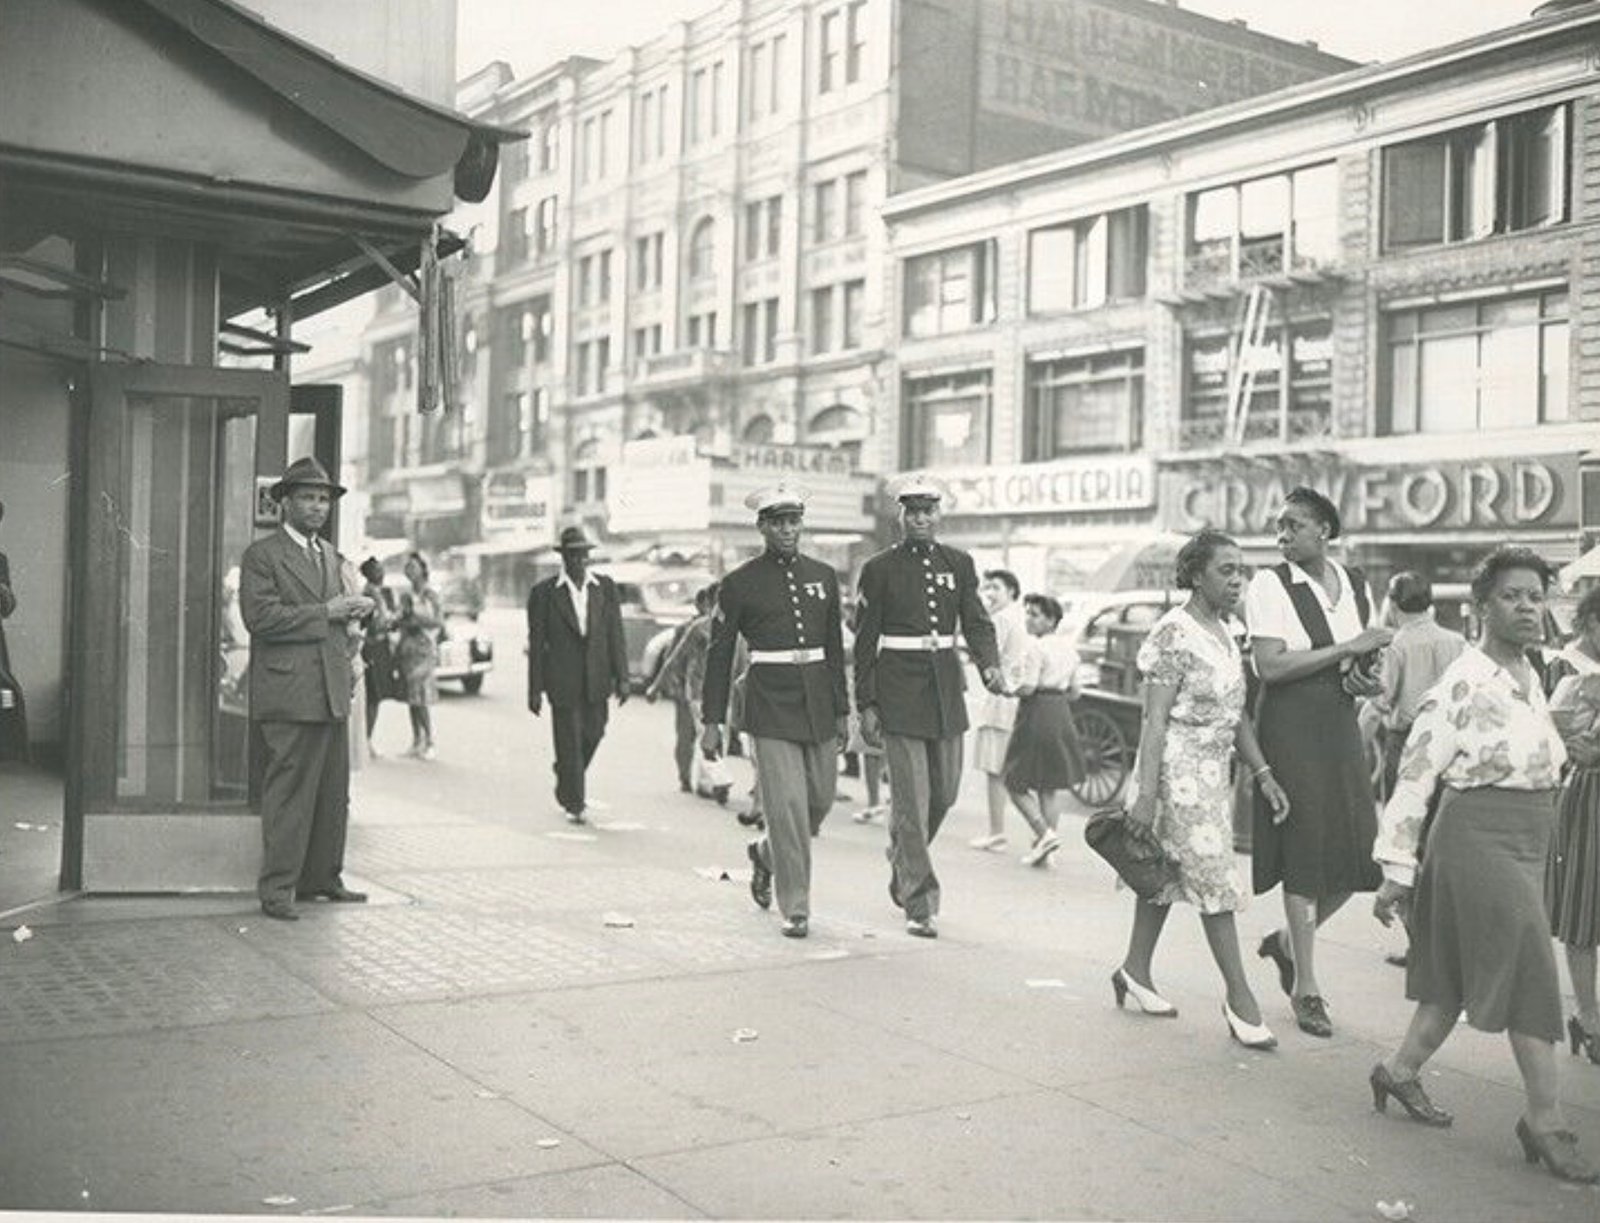 125th Street, June, 1943